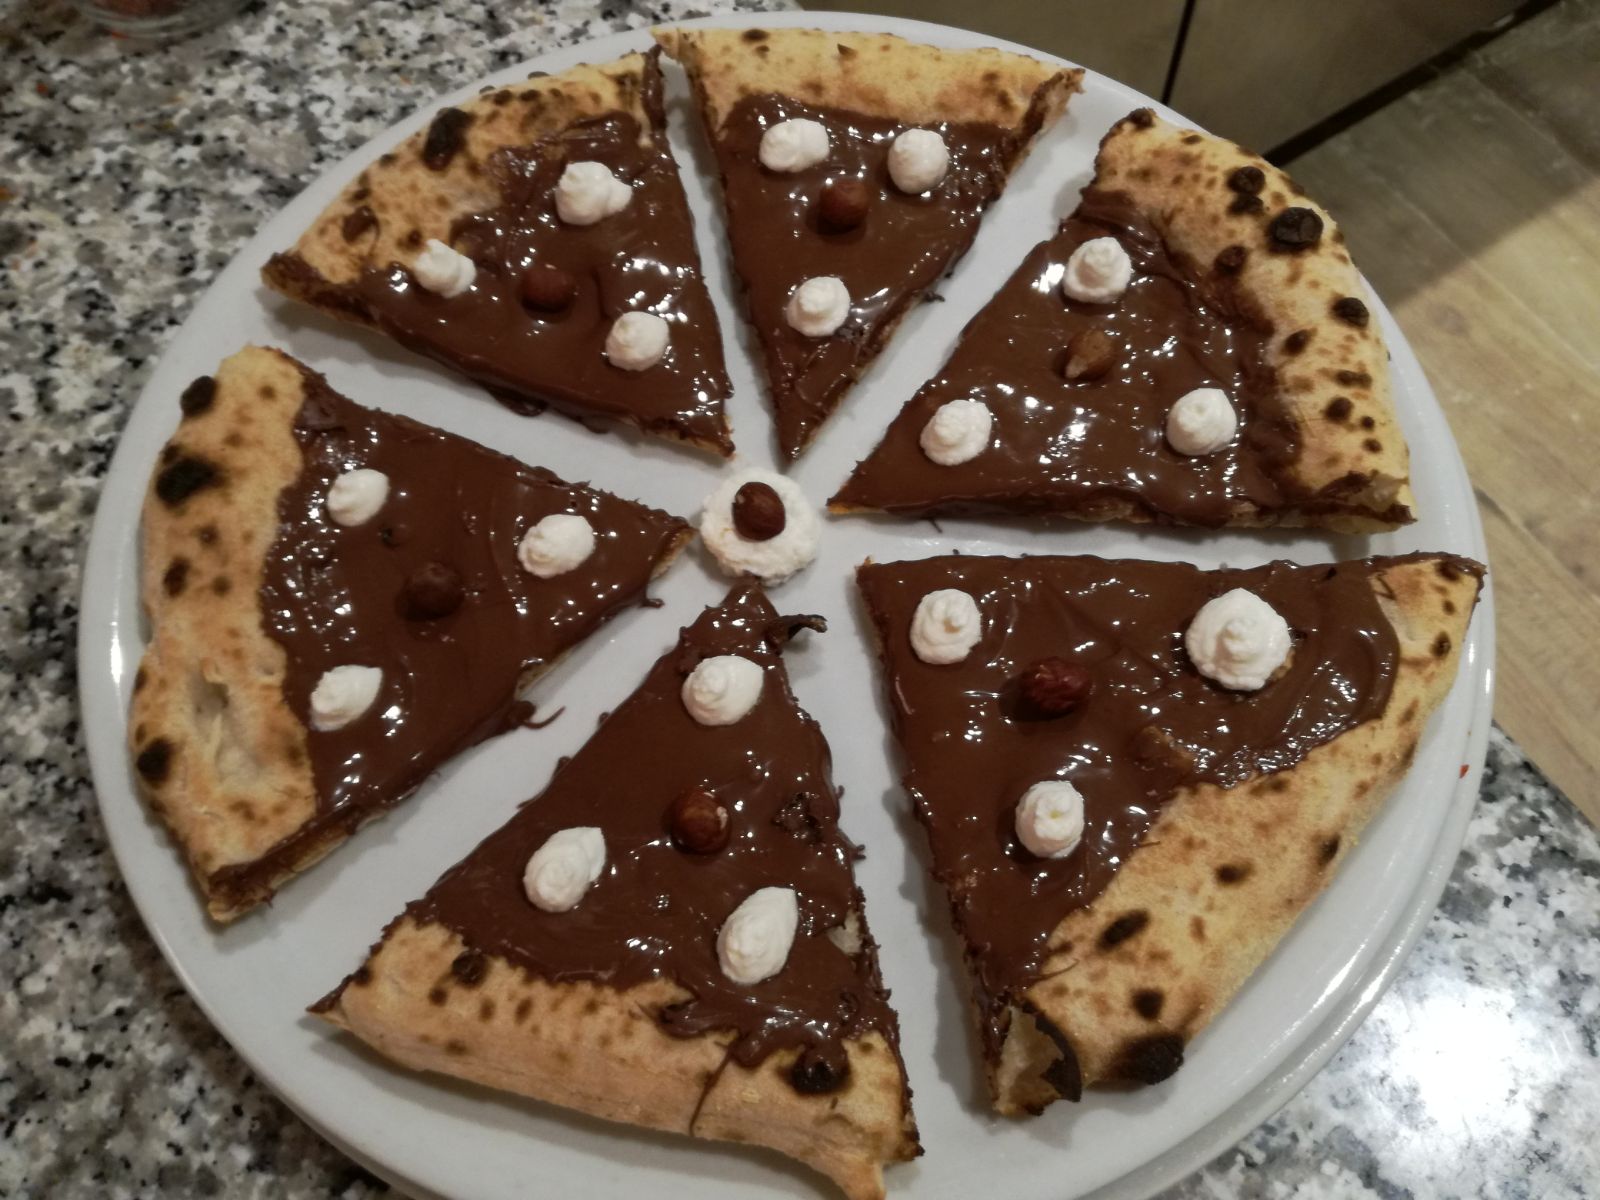 pizza-6